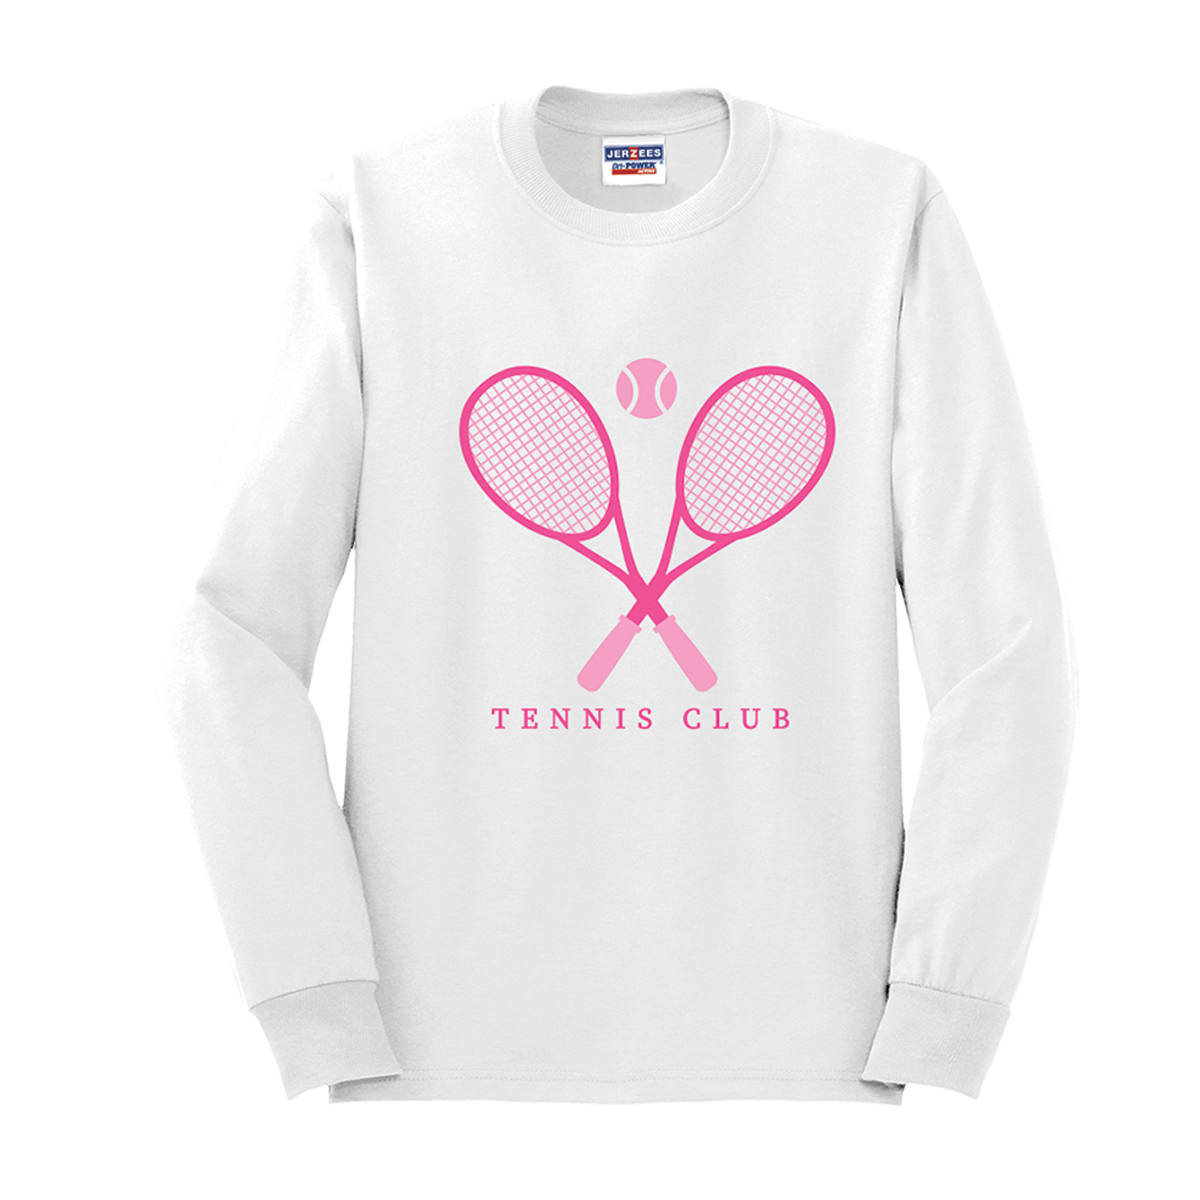 Tennis Club Long Sleeve Shirt